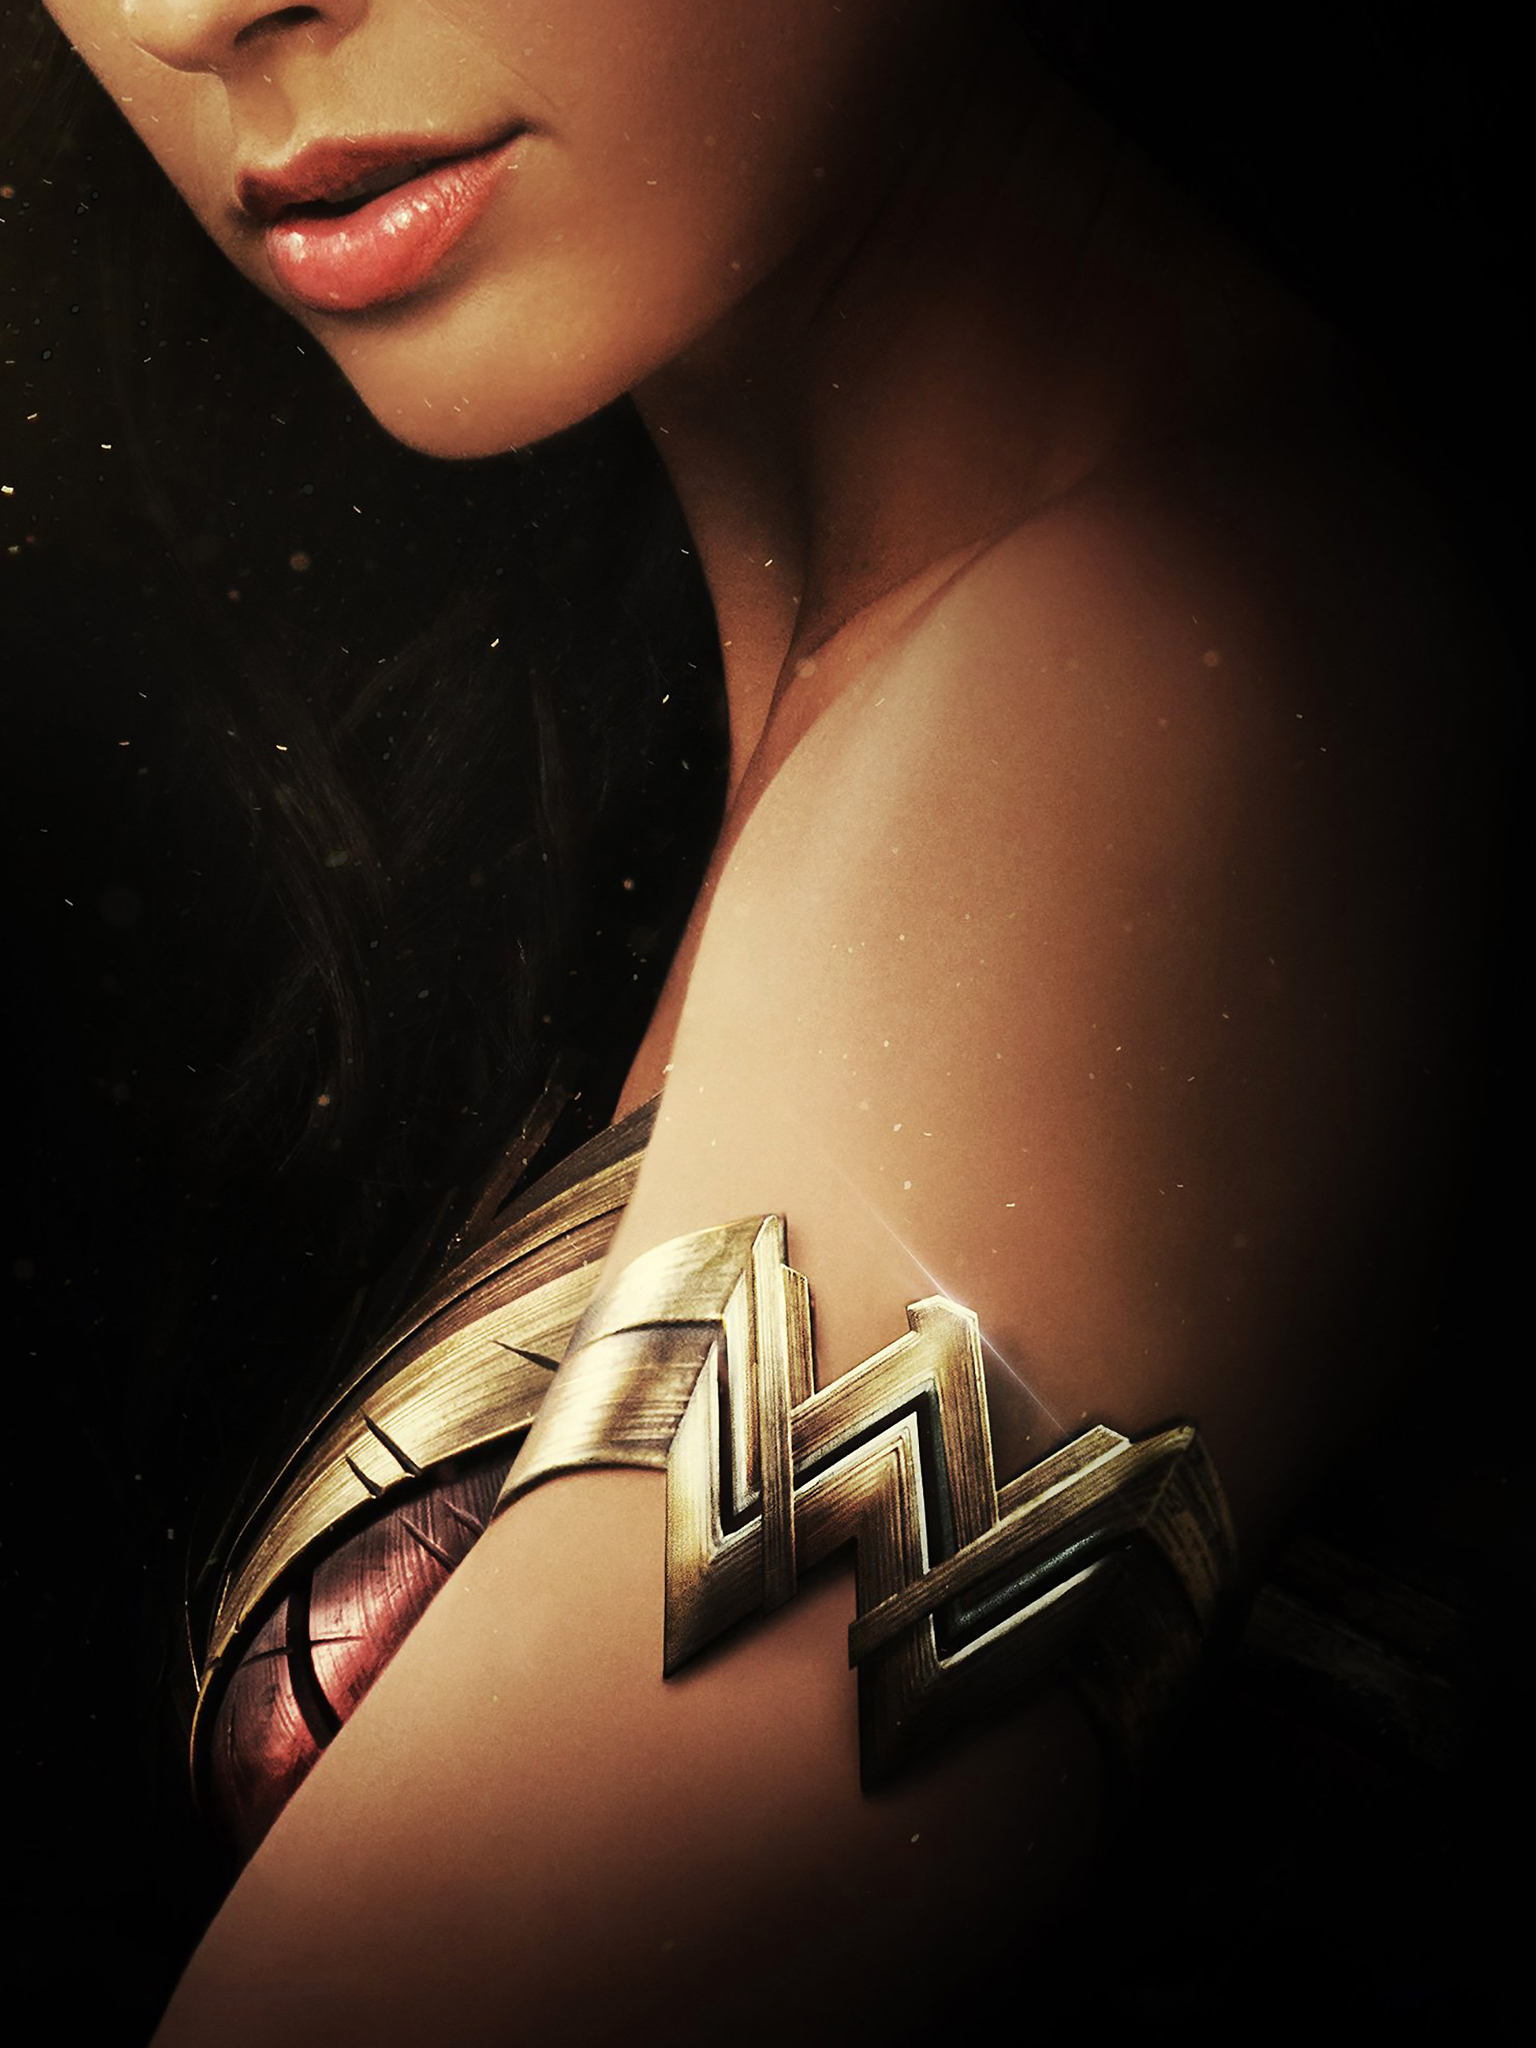 General 1536x2048 Wonder Woman Gal Gadot juicy lips women DC Extended Universe movies closeup superheroines